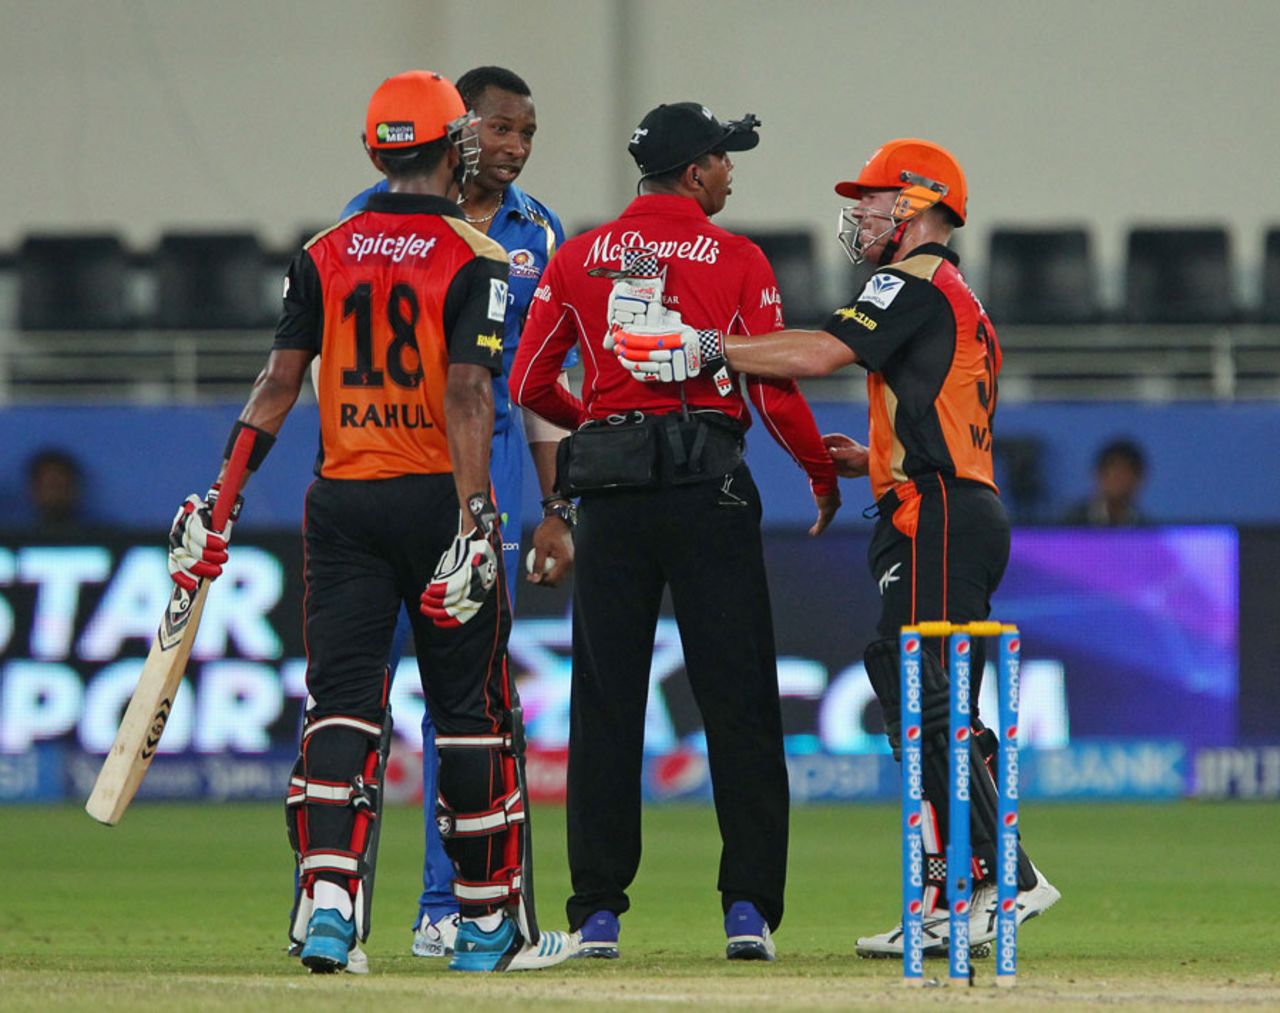 David Warner checks on umpire Kumar Dharmasena after the latter was hit by a ball, Mumbai Indians v Sunrisers Hyderabad, IPL 2014, Dubai, April 30, 2014